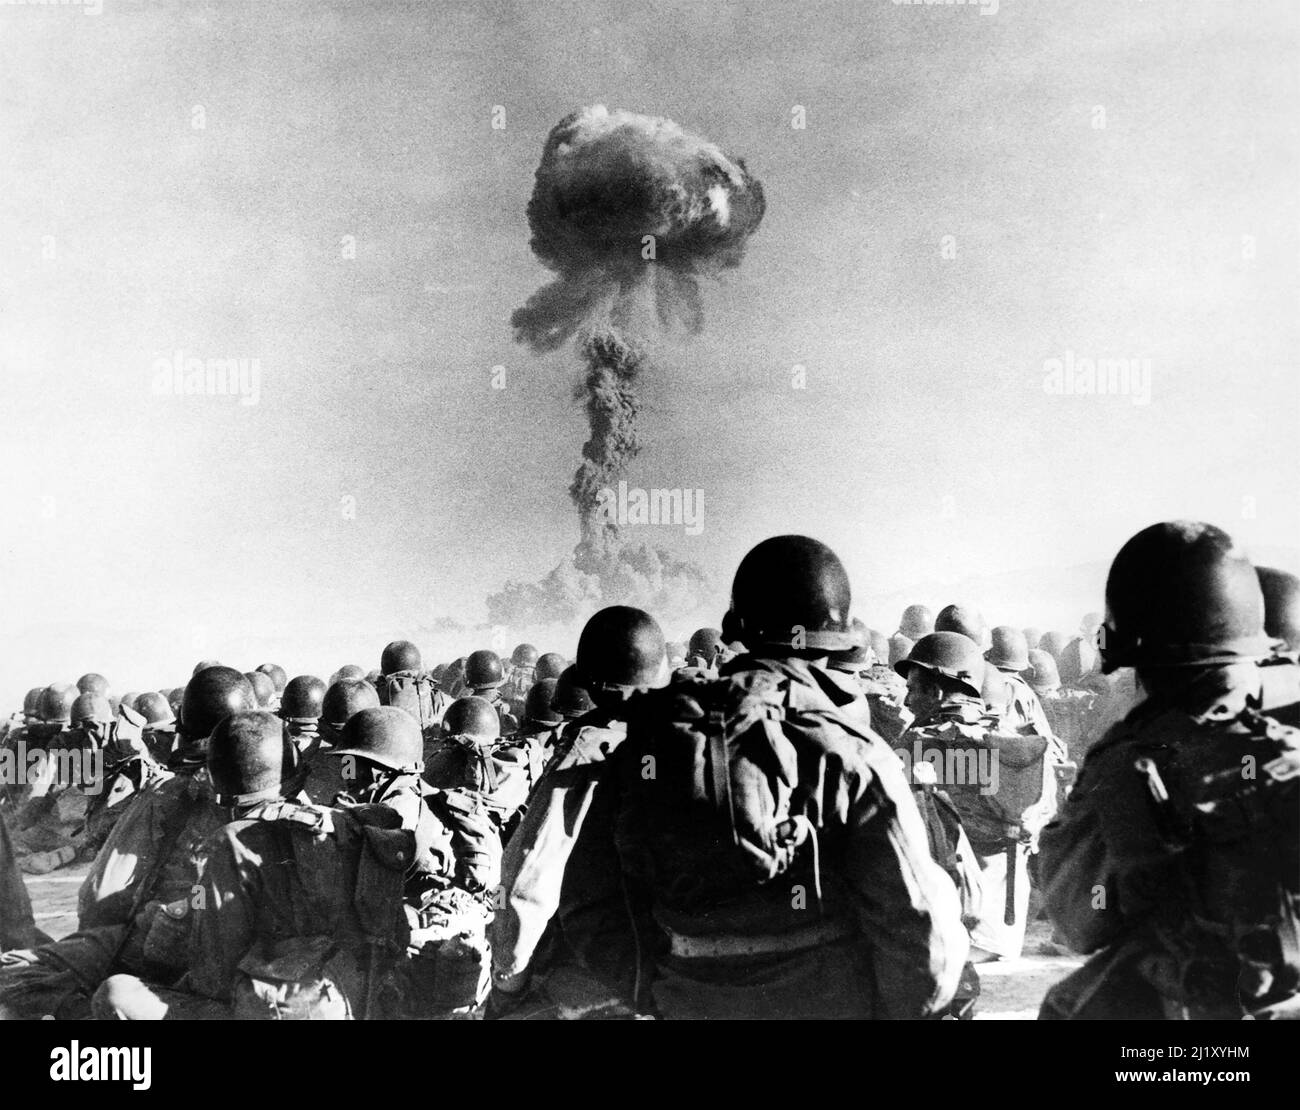 Atomic Bomb Testing. Operation Buster-Jangle - Dog Test, Desert Rock I, Nevada Nuclear Test Site, November 1951. Stock Photo